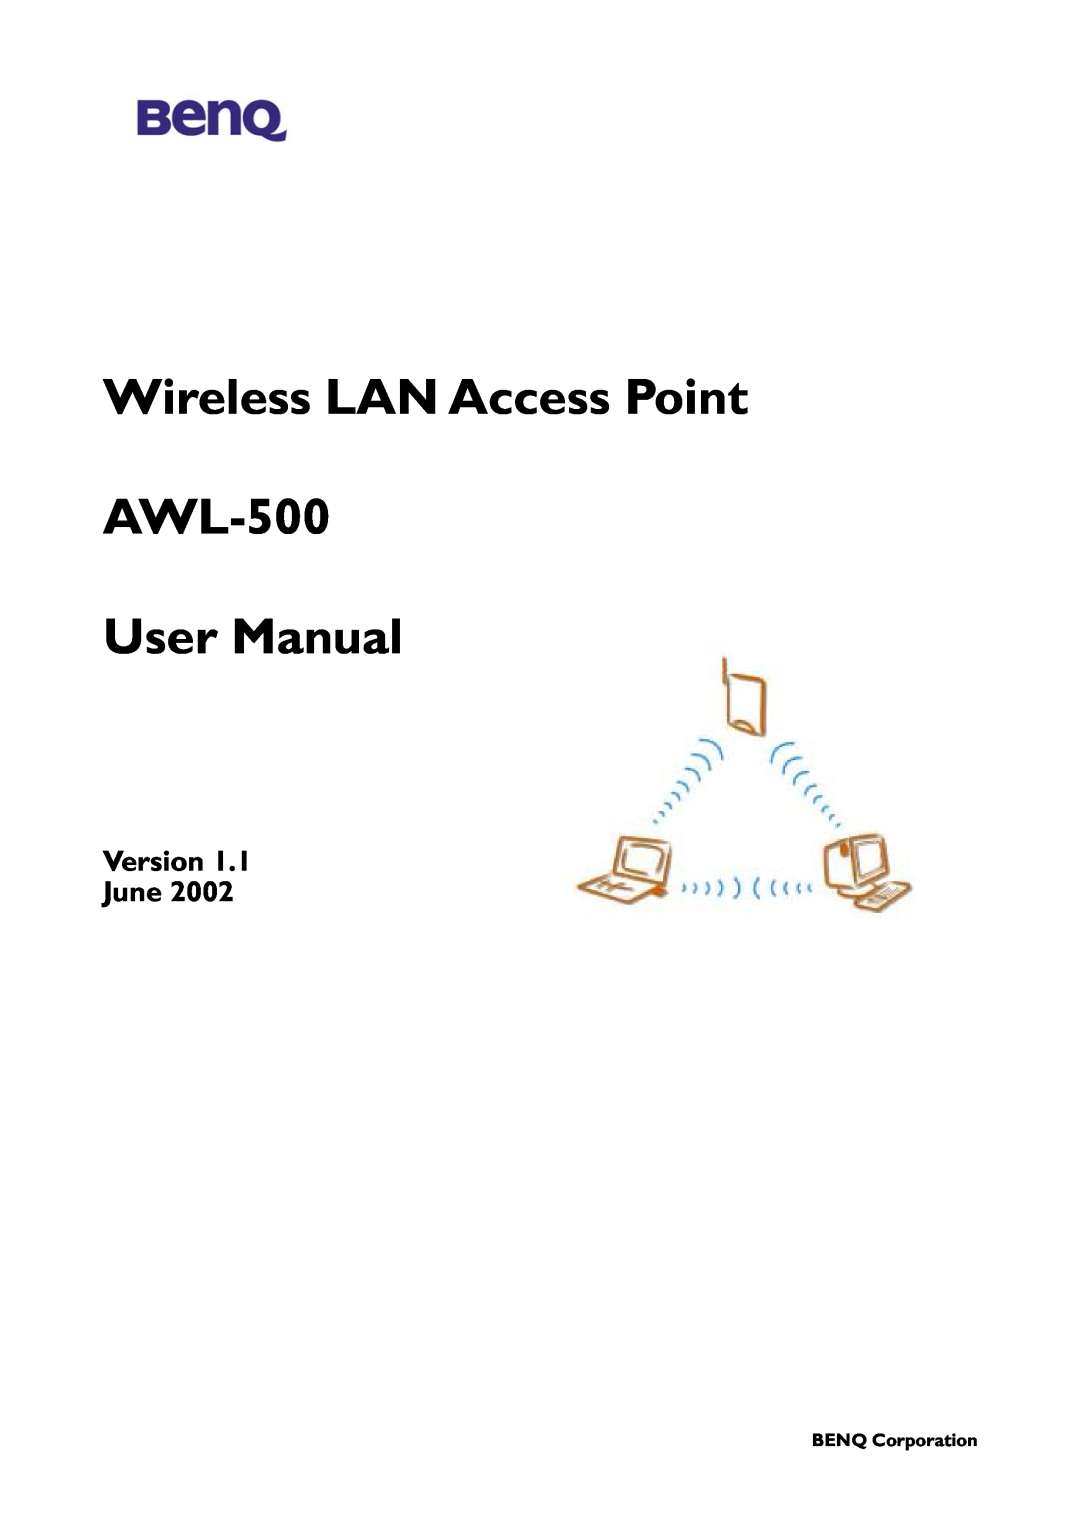 BenQ user manual Version June, Wireless LAN Access Point AWL-500 User Manual, BENQ Corporation 